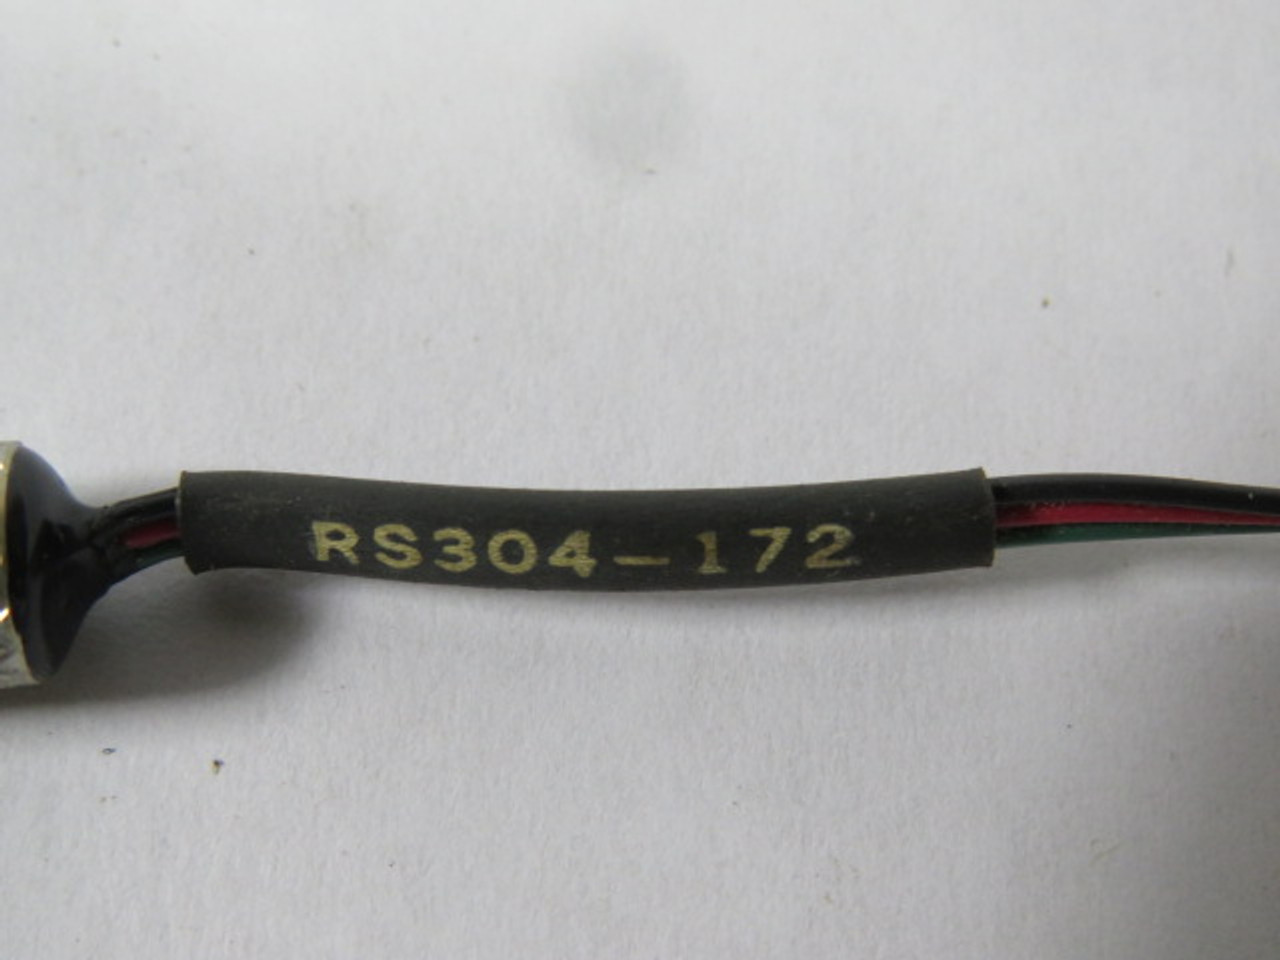 RS Pro RS304-172 Barrel Digital Magnetic Pickup 5-15VDC 1/4-40 UNS-2A USED